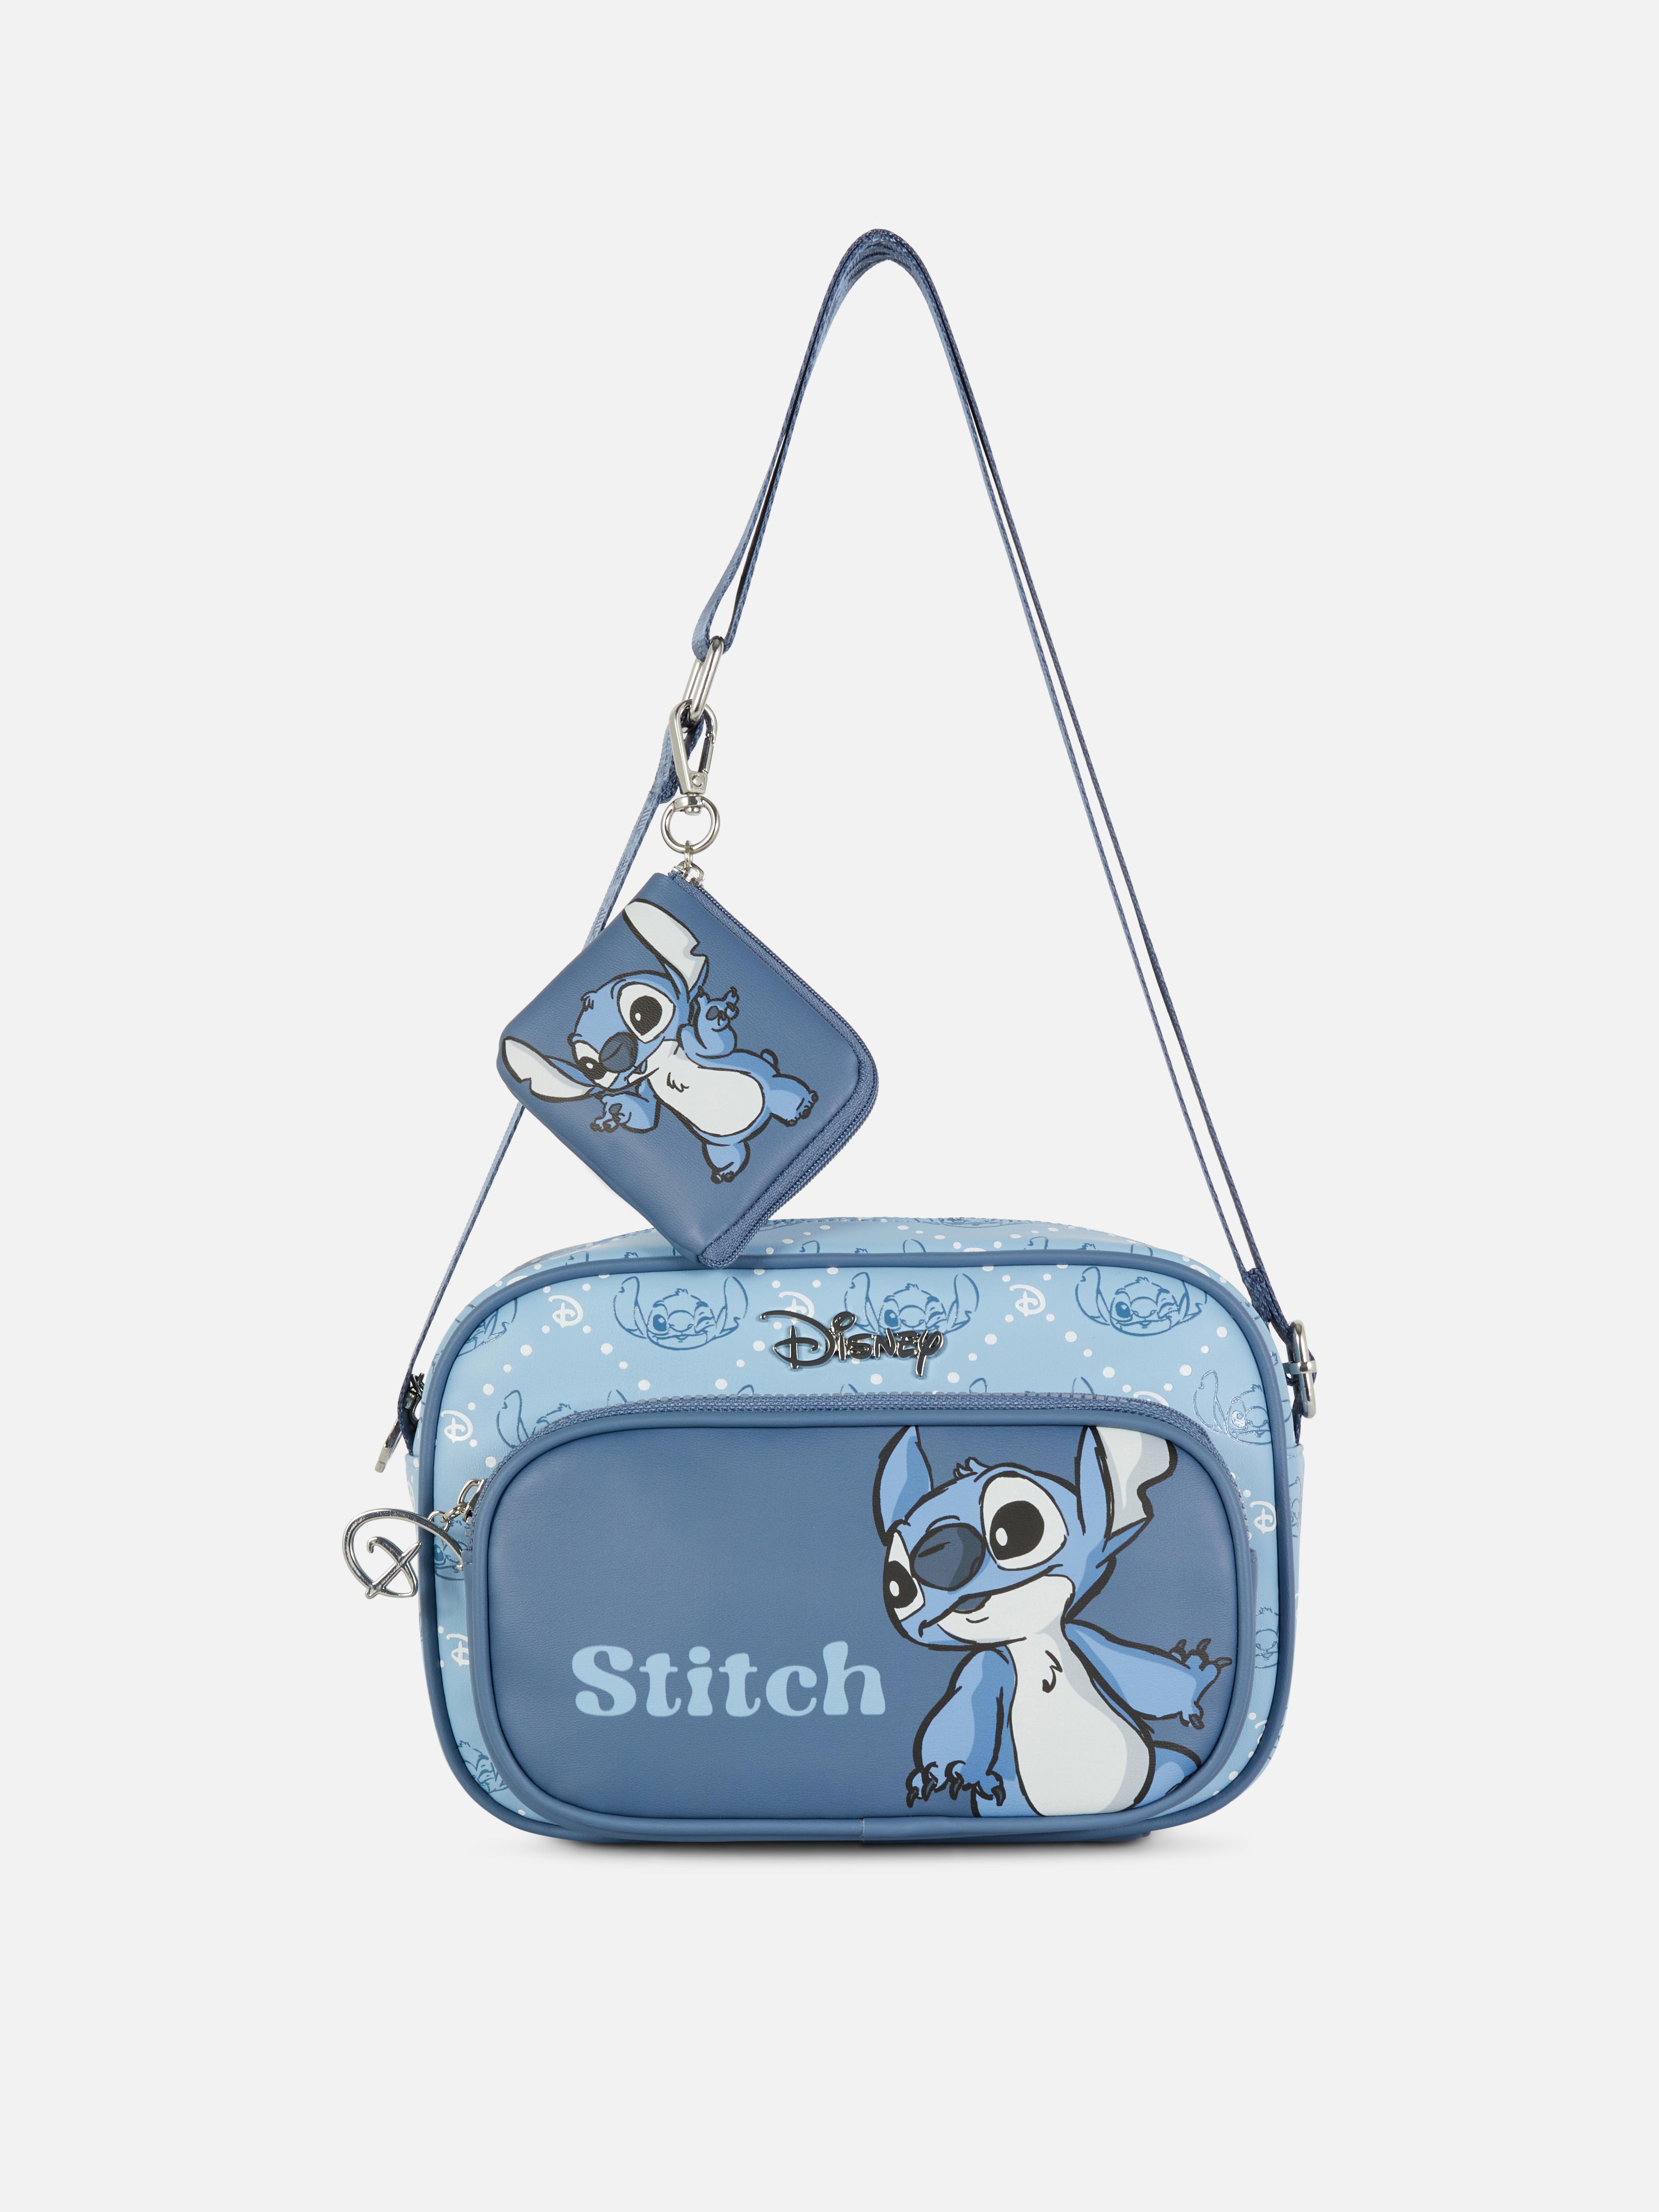 Bolsa Disney Primark - Stitch, Bolsa de Ombro Feminina Disney Nunca Usado  92458345